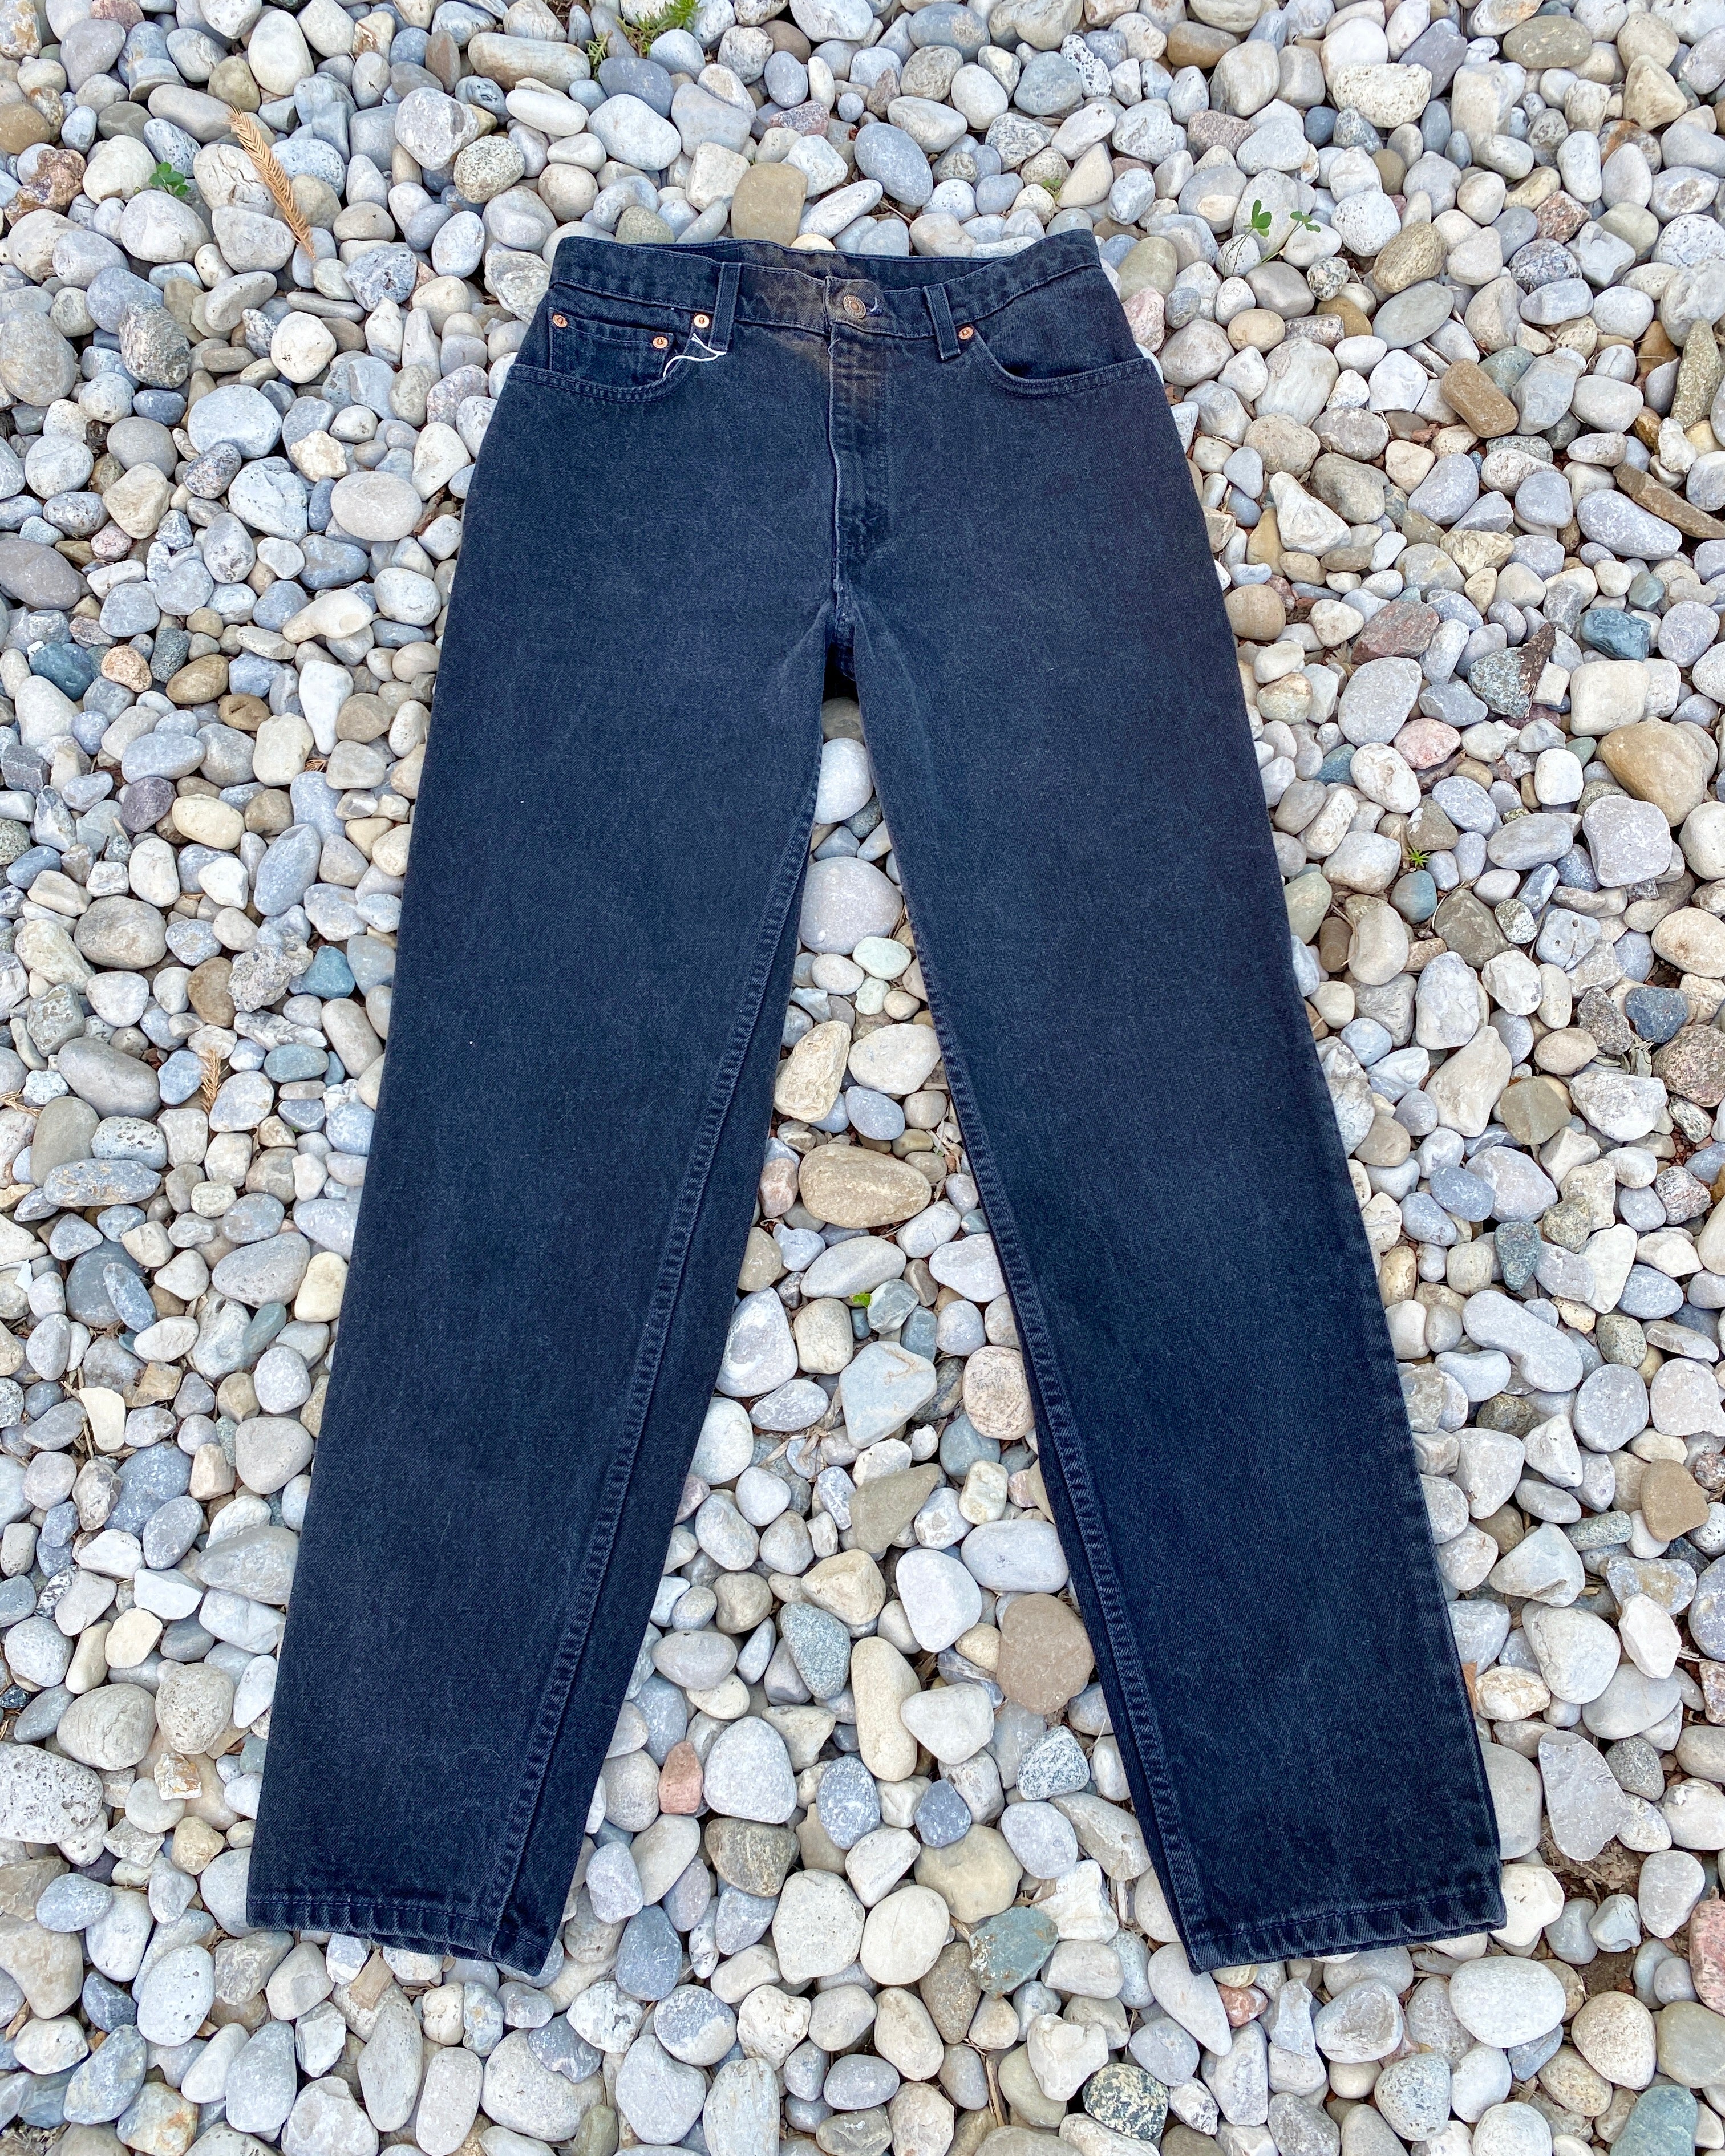 Vintage Levis 551 Black Wash Jeans size 29 USA